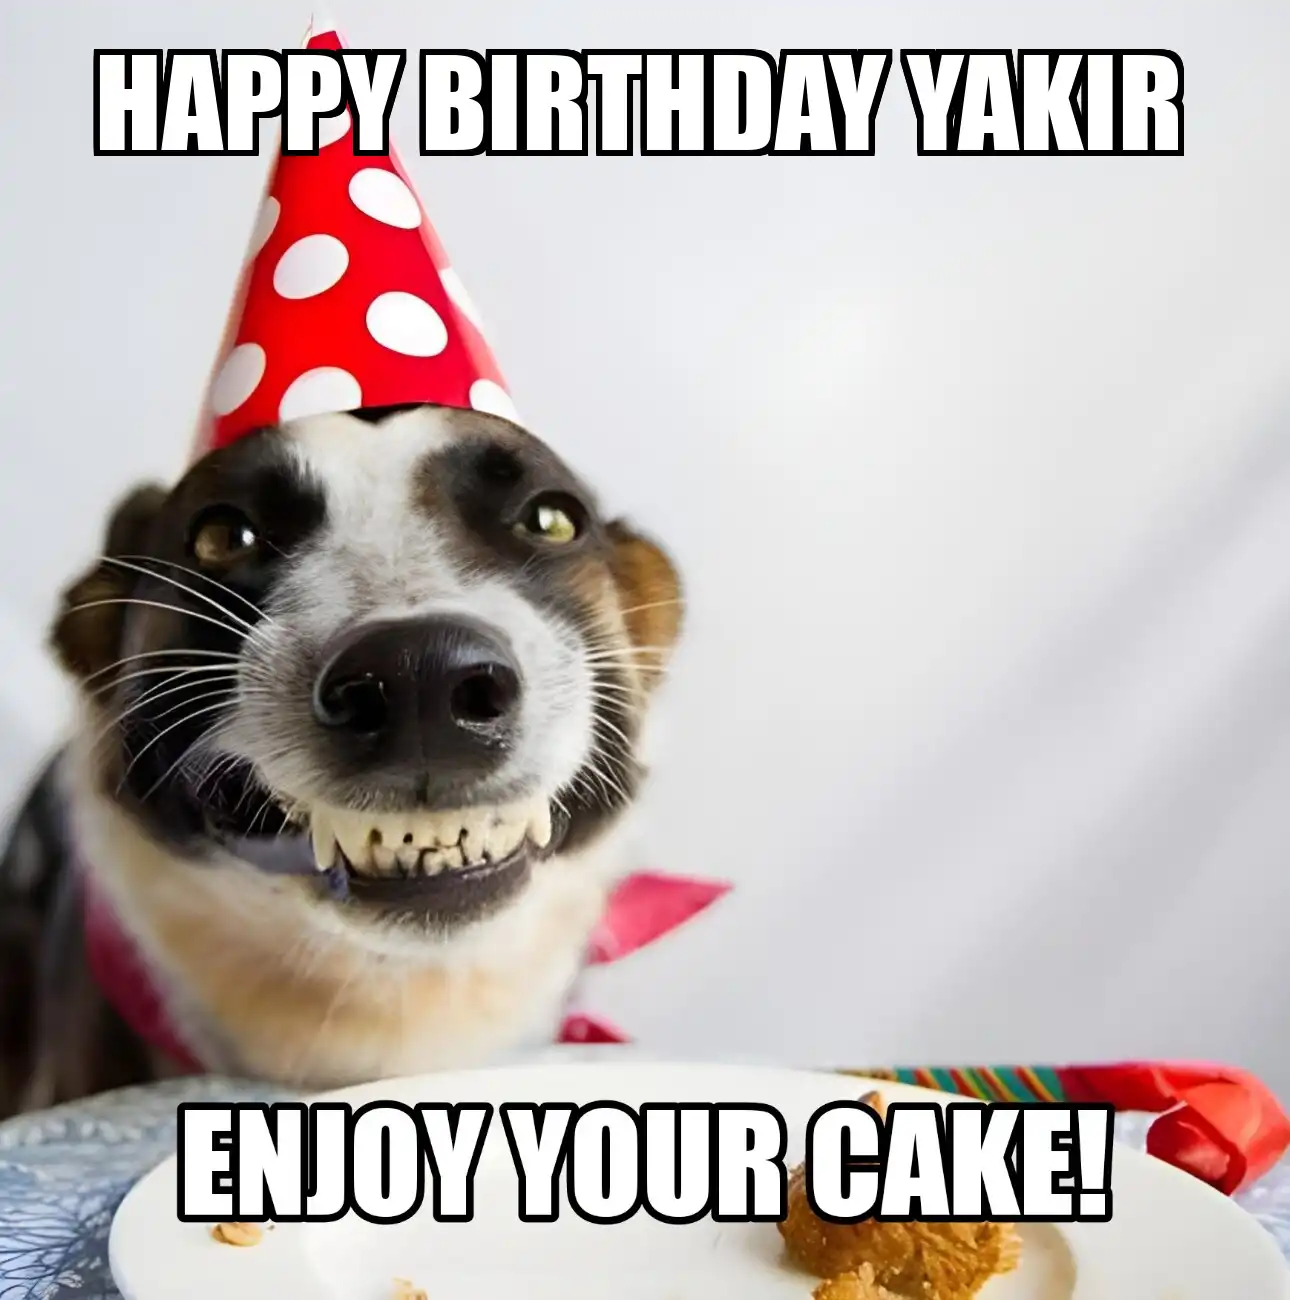 Happy Birthday Yakir Enjoy Your Cake Dog Meme